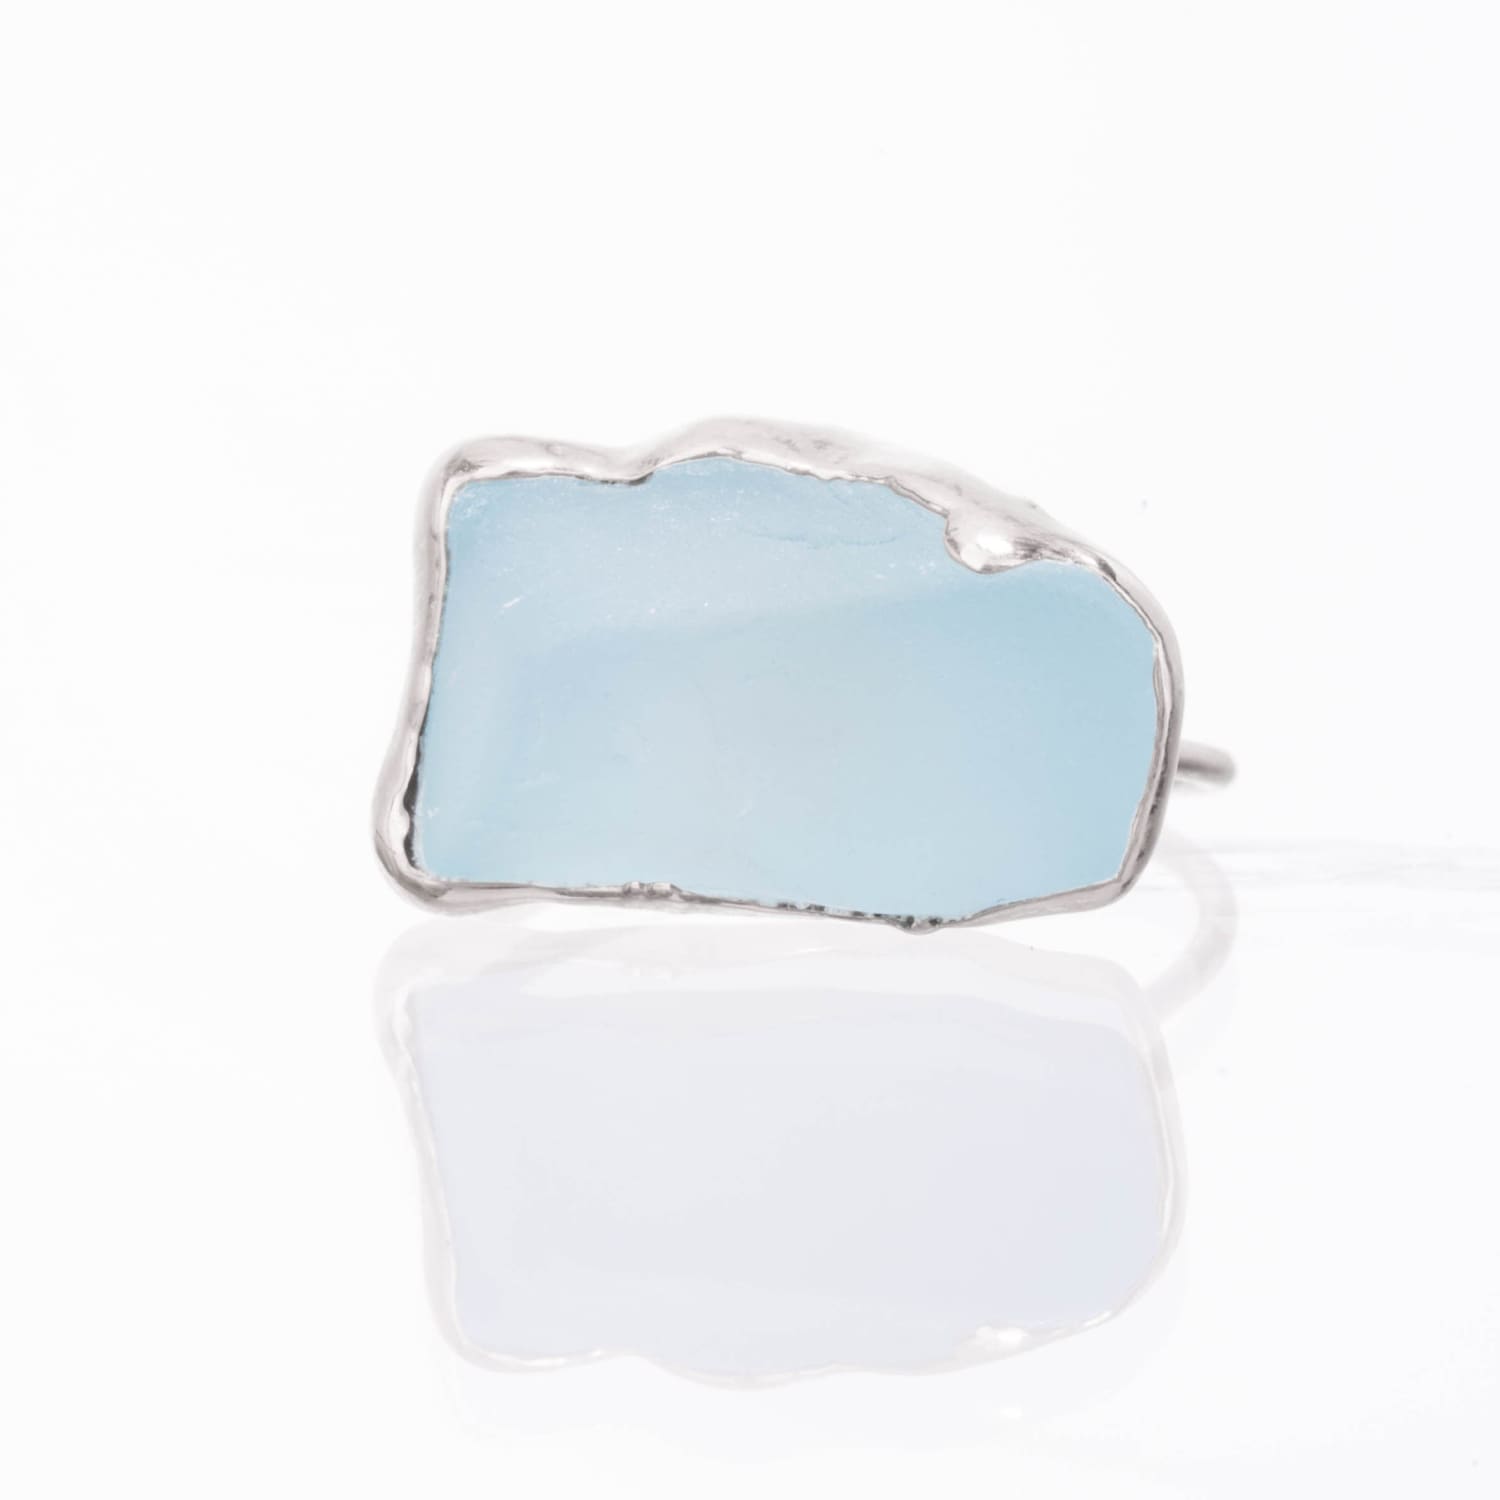 Raw Sky Blue Topaz Ring in Sterling Silver Gemstone Jewelry